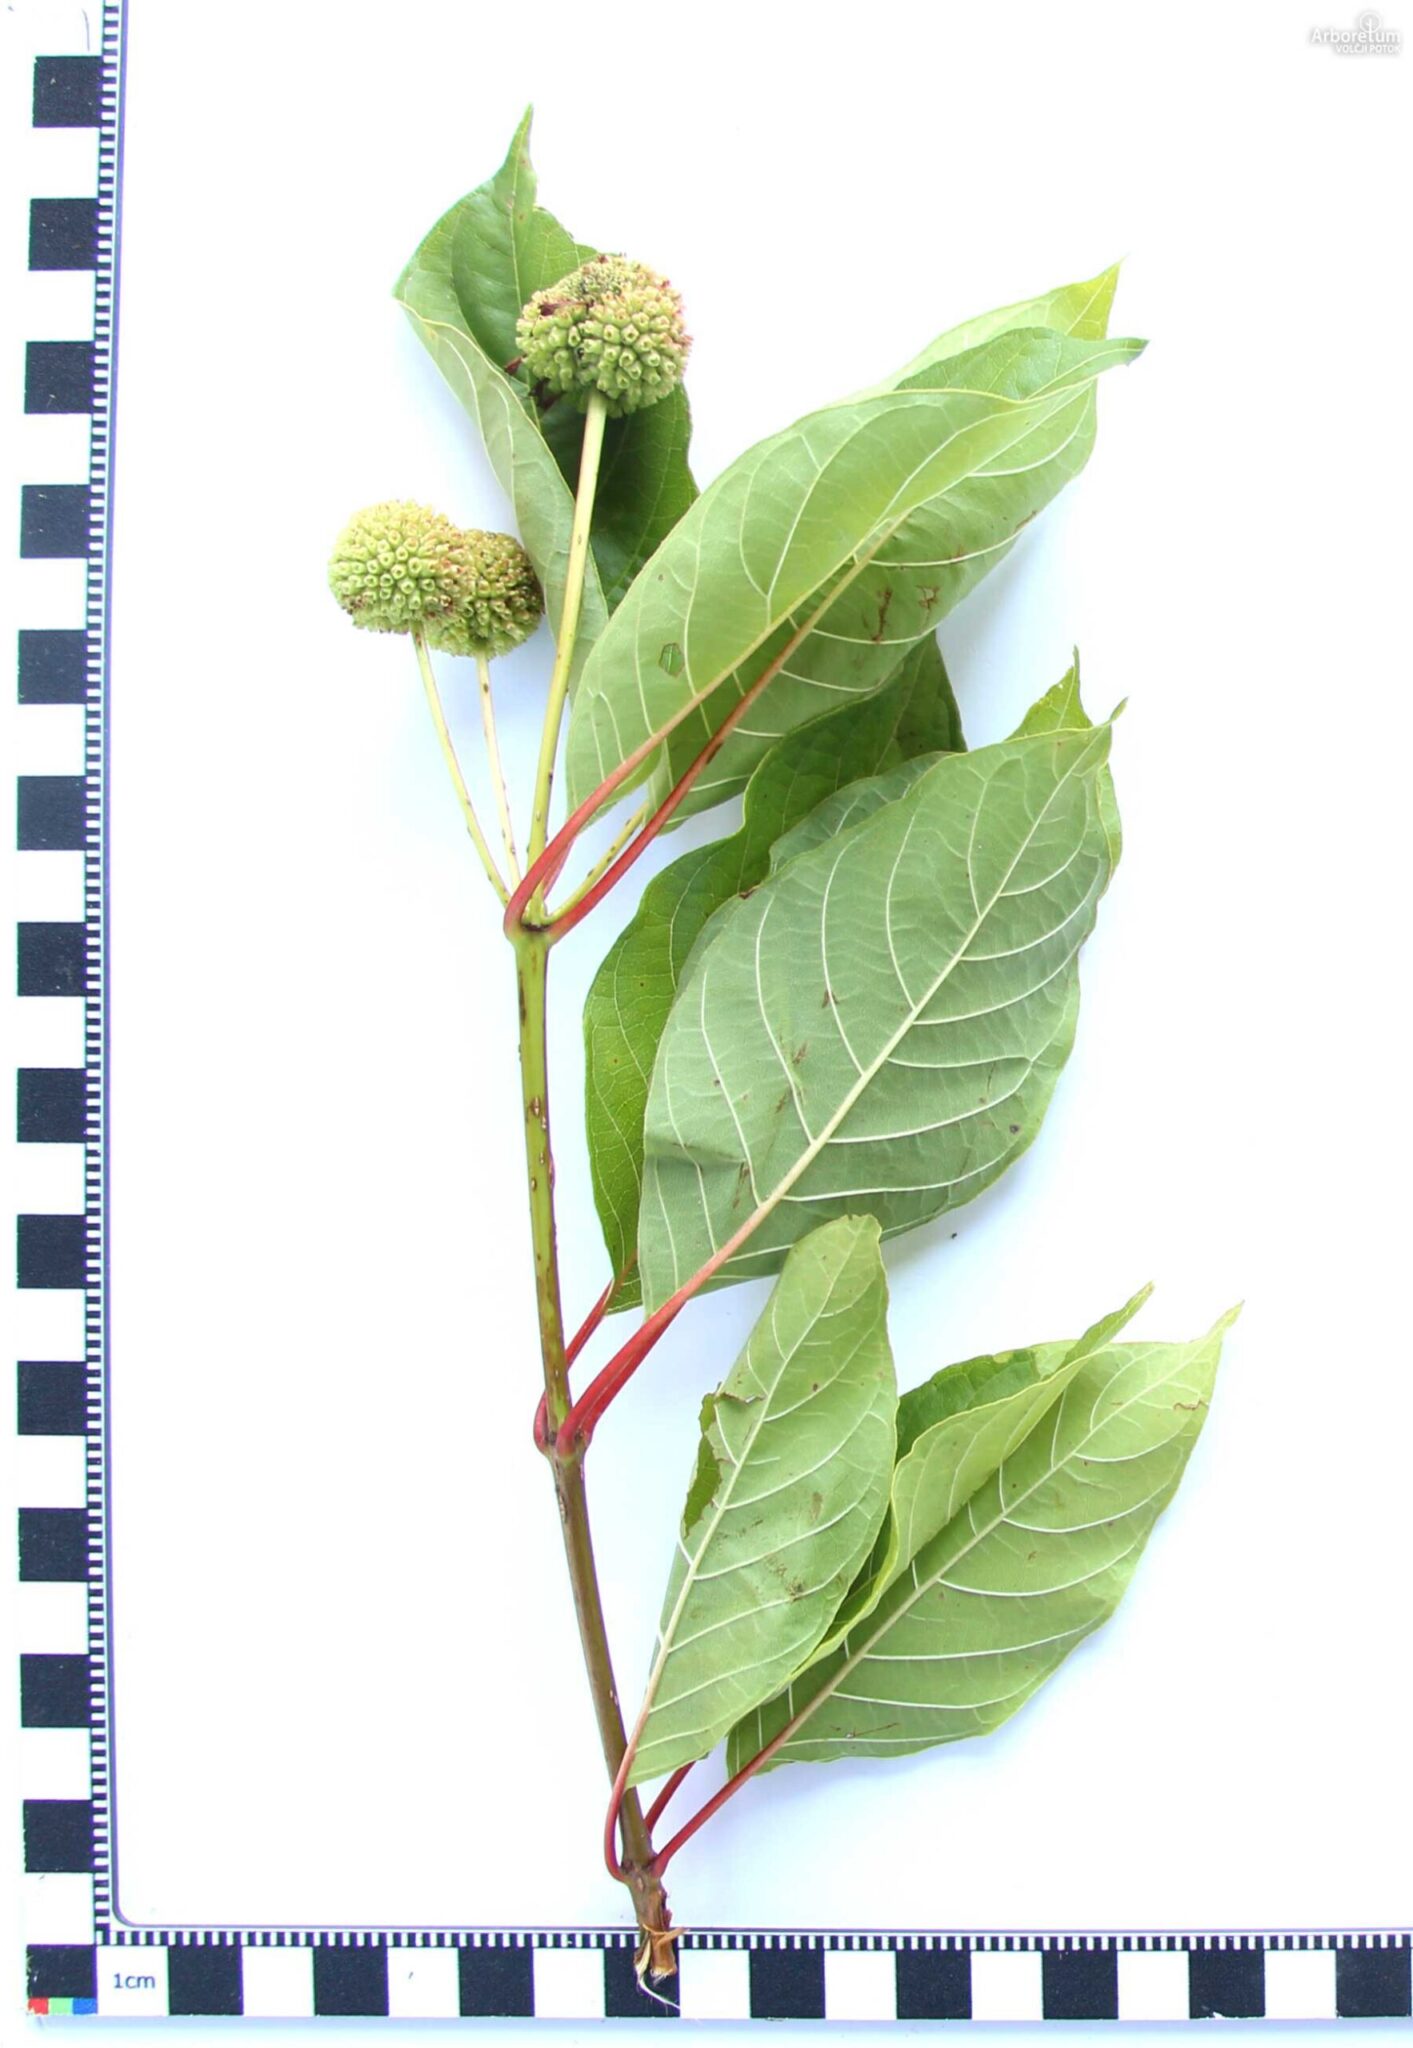 Cephalanthus occidentalis 